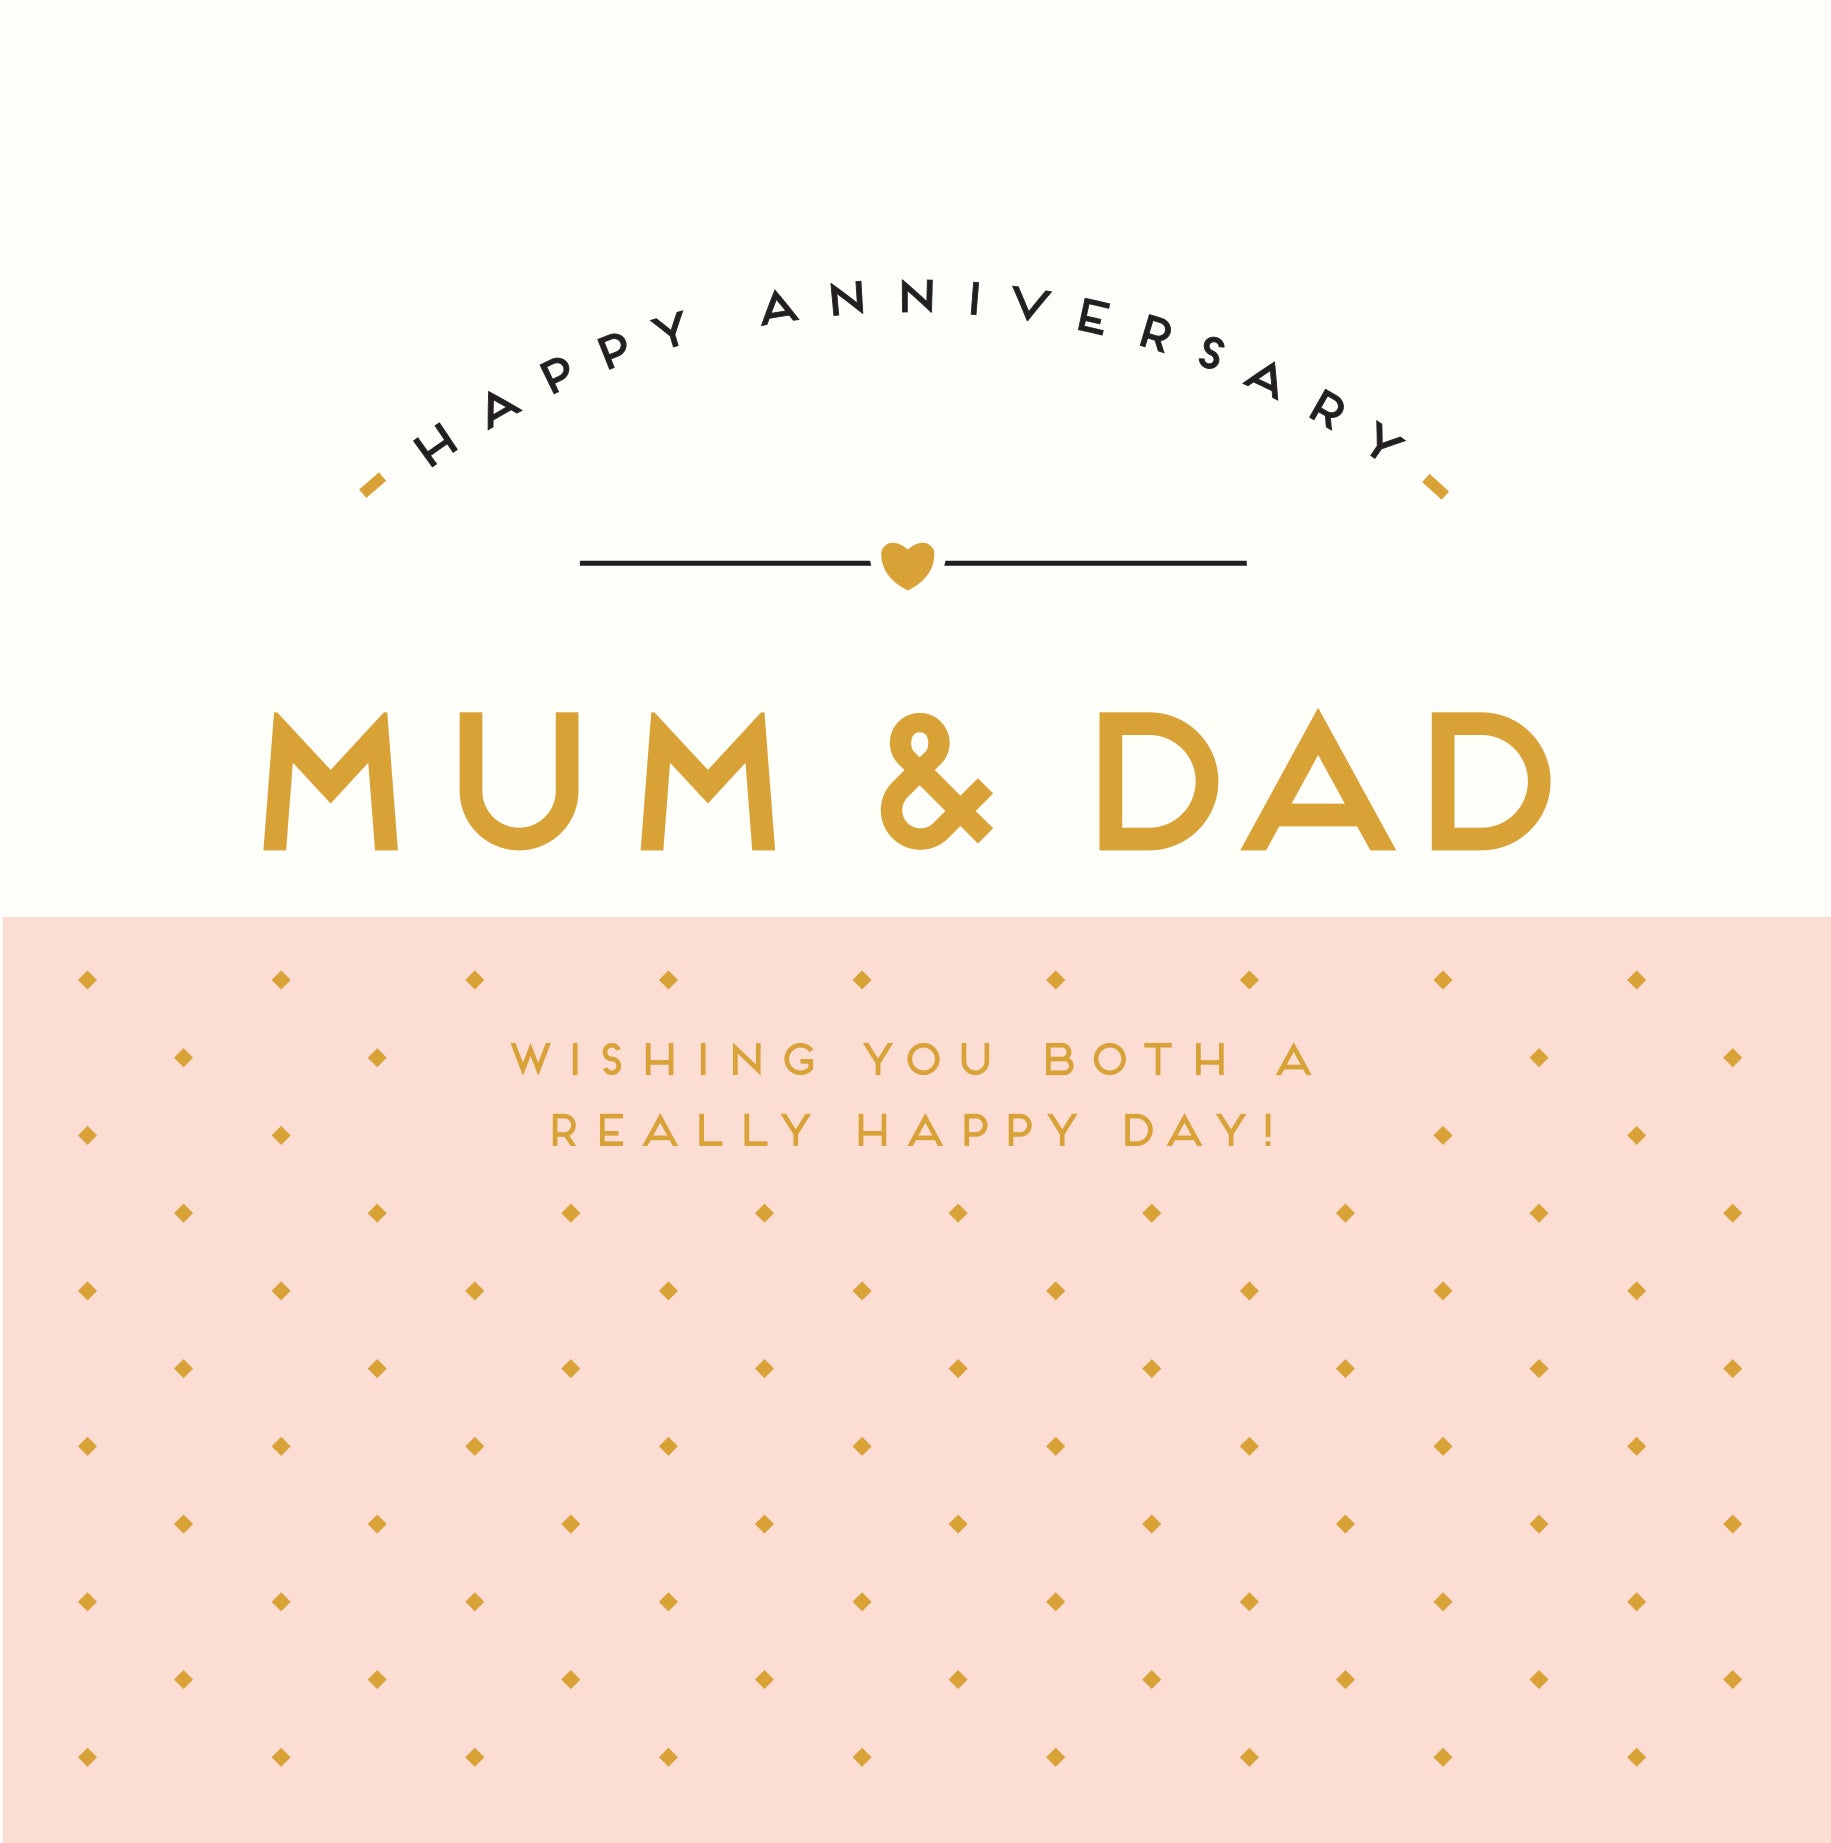 Mum & Dad Wedding Anniversary Card by penny black